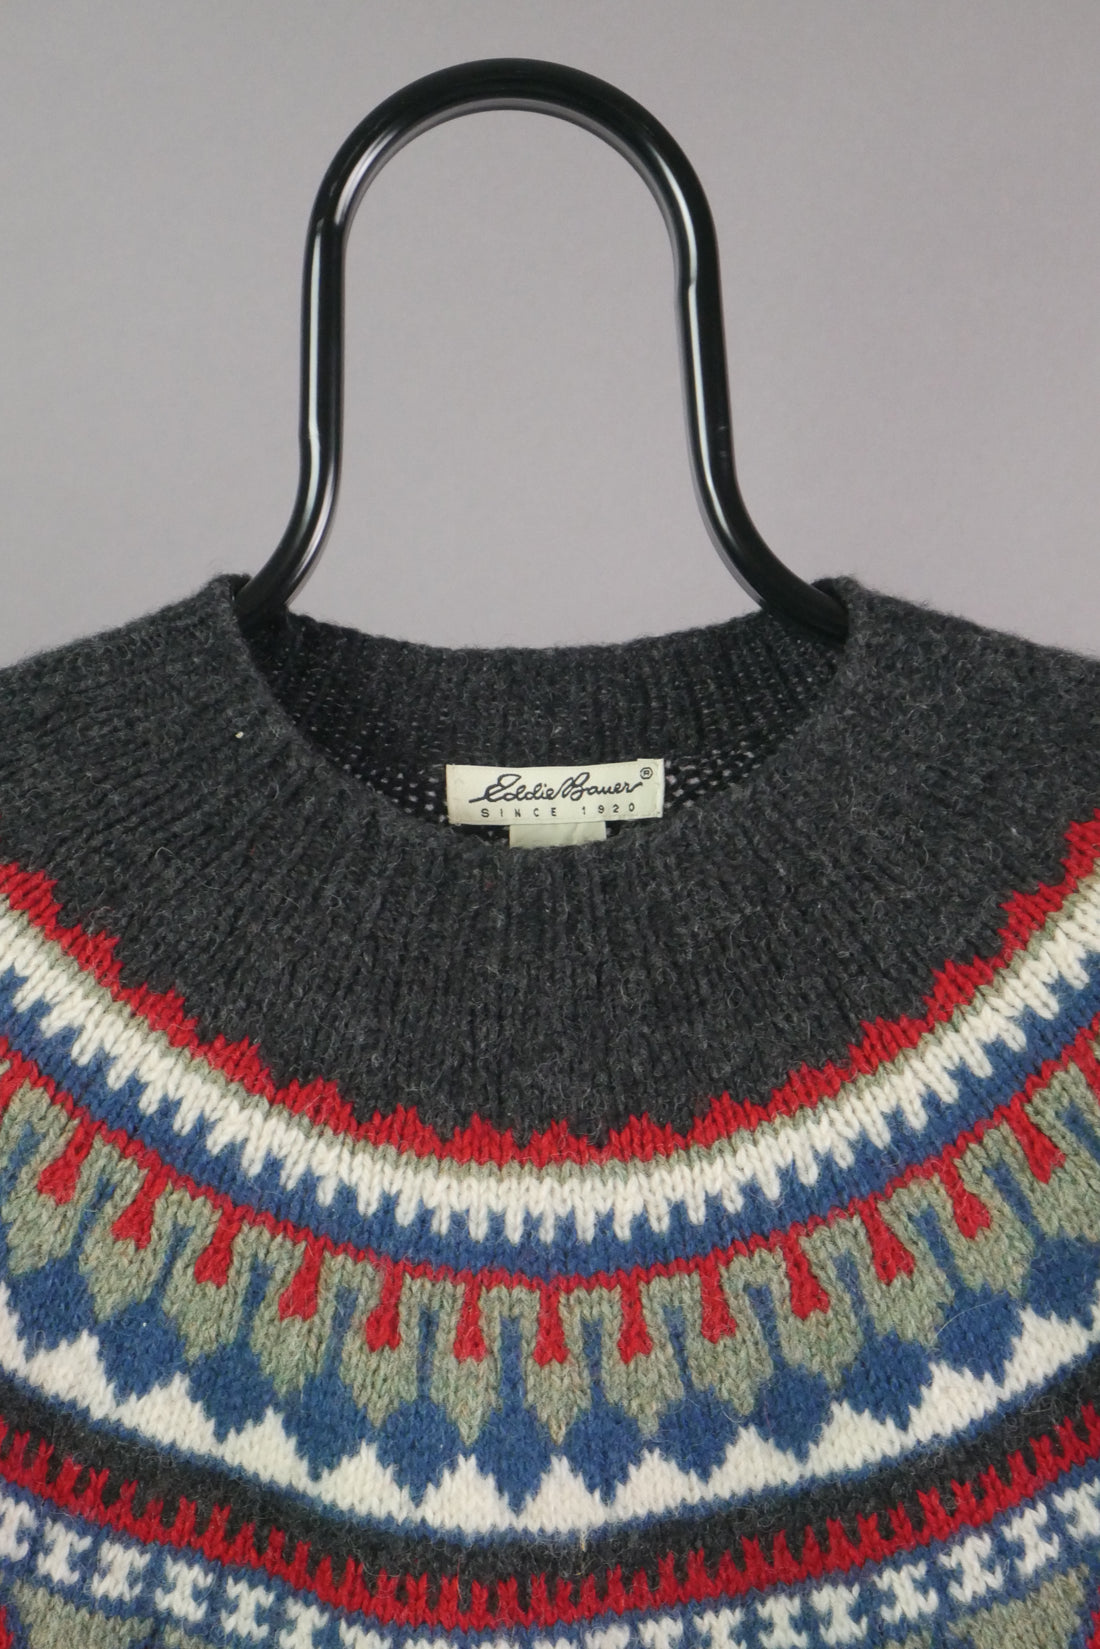 The Vintage Eddie Bauer Pure Wool Fair Isle Knit Jumper (Womens M)